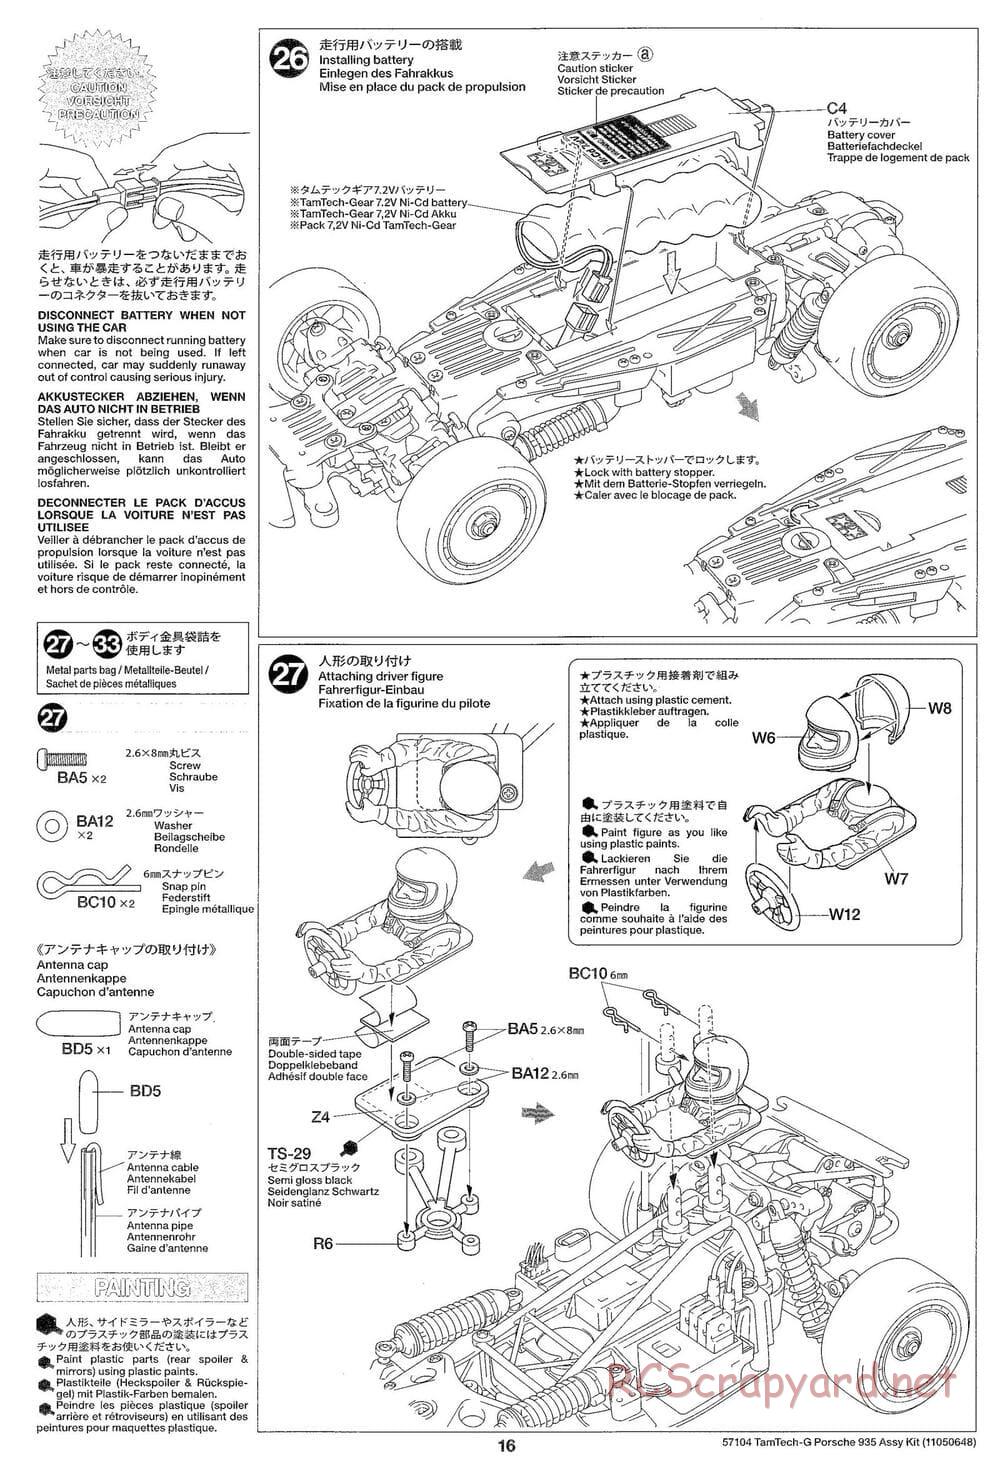 Tamiya - Porsche 935 Martini - GT-01 Chassis - Manual - Page 16